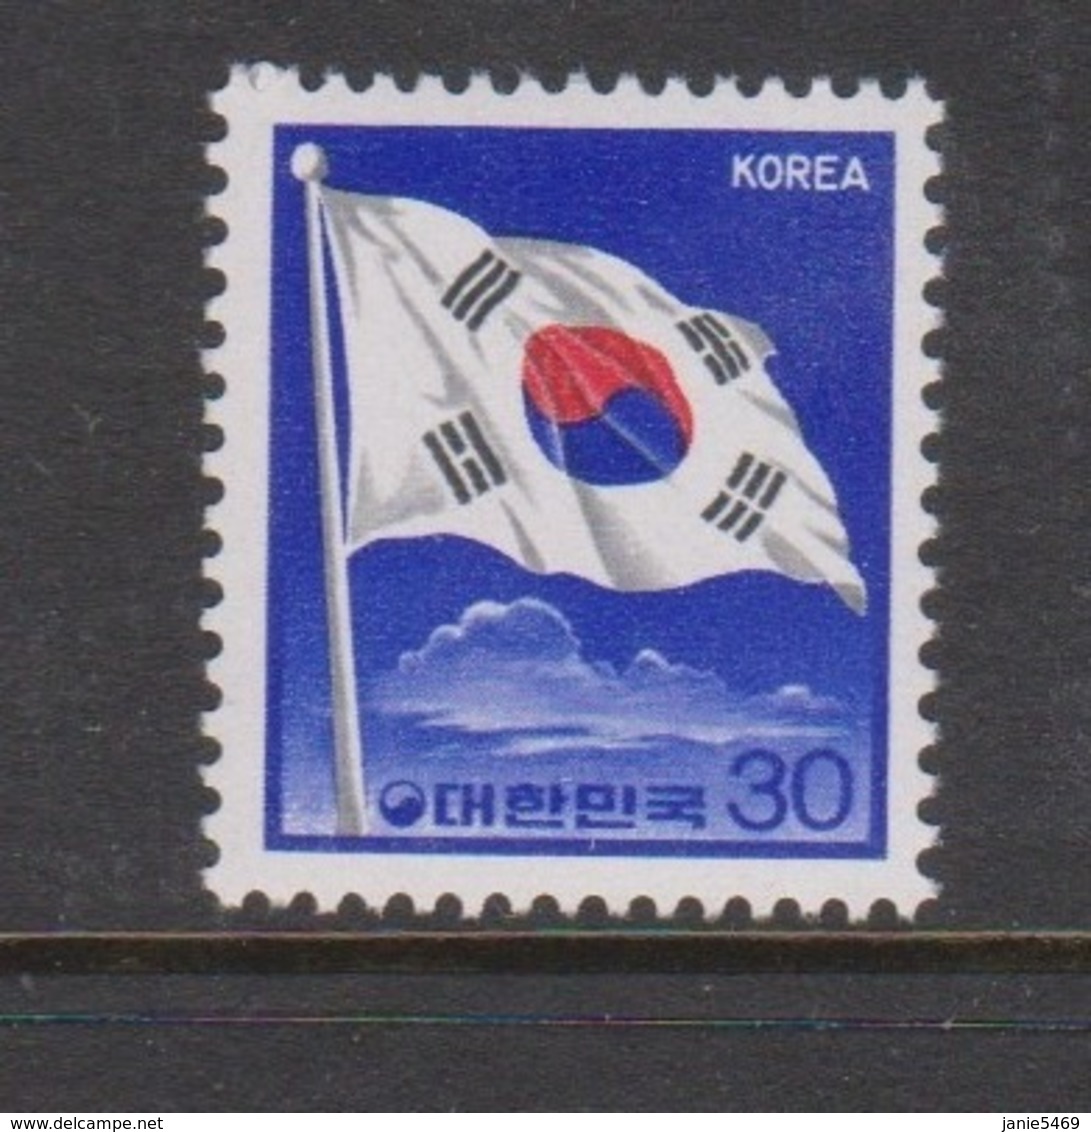 Korea Scott 1221 1980 Flag,MNH - Stamps